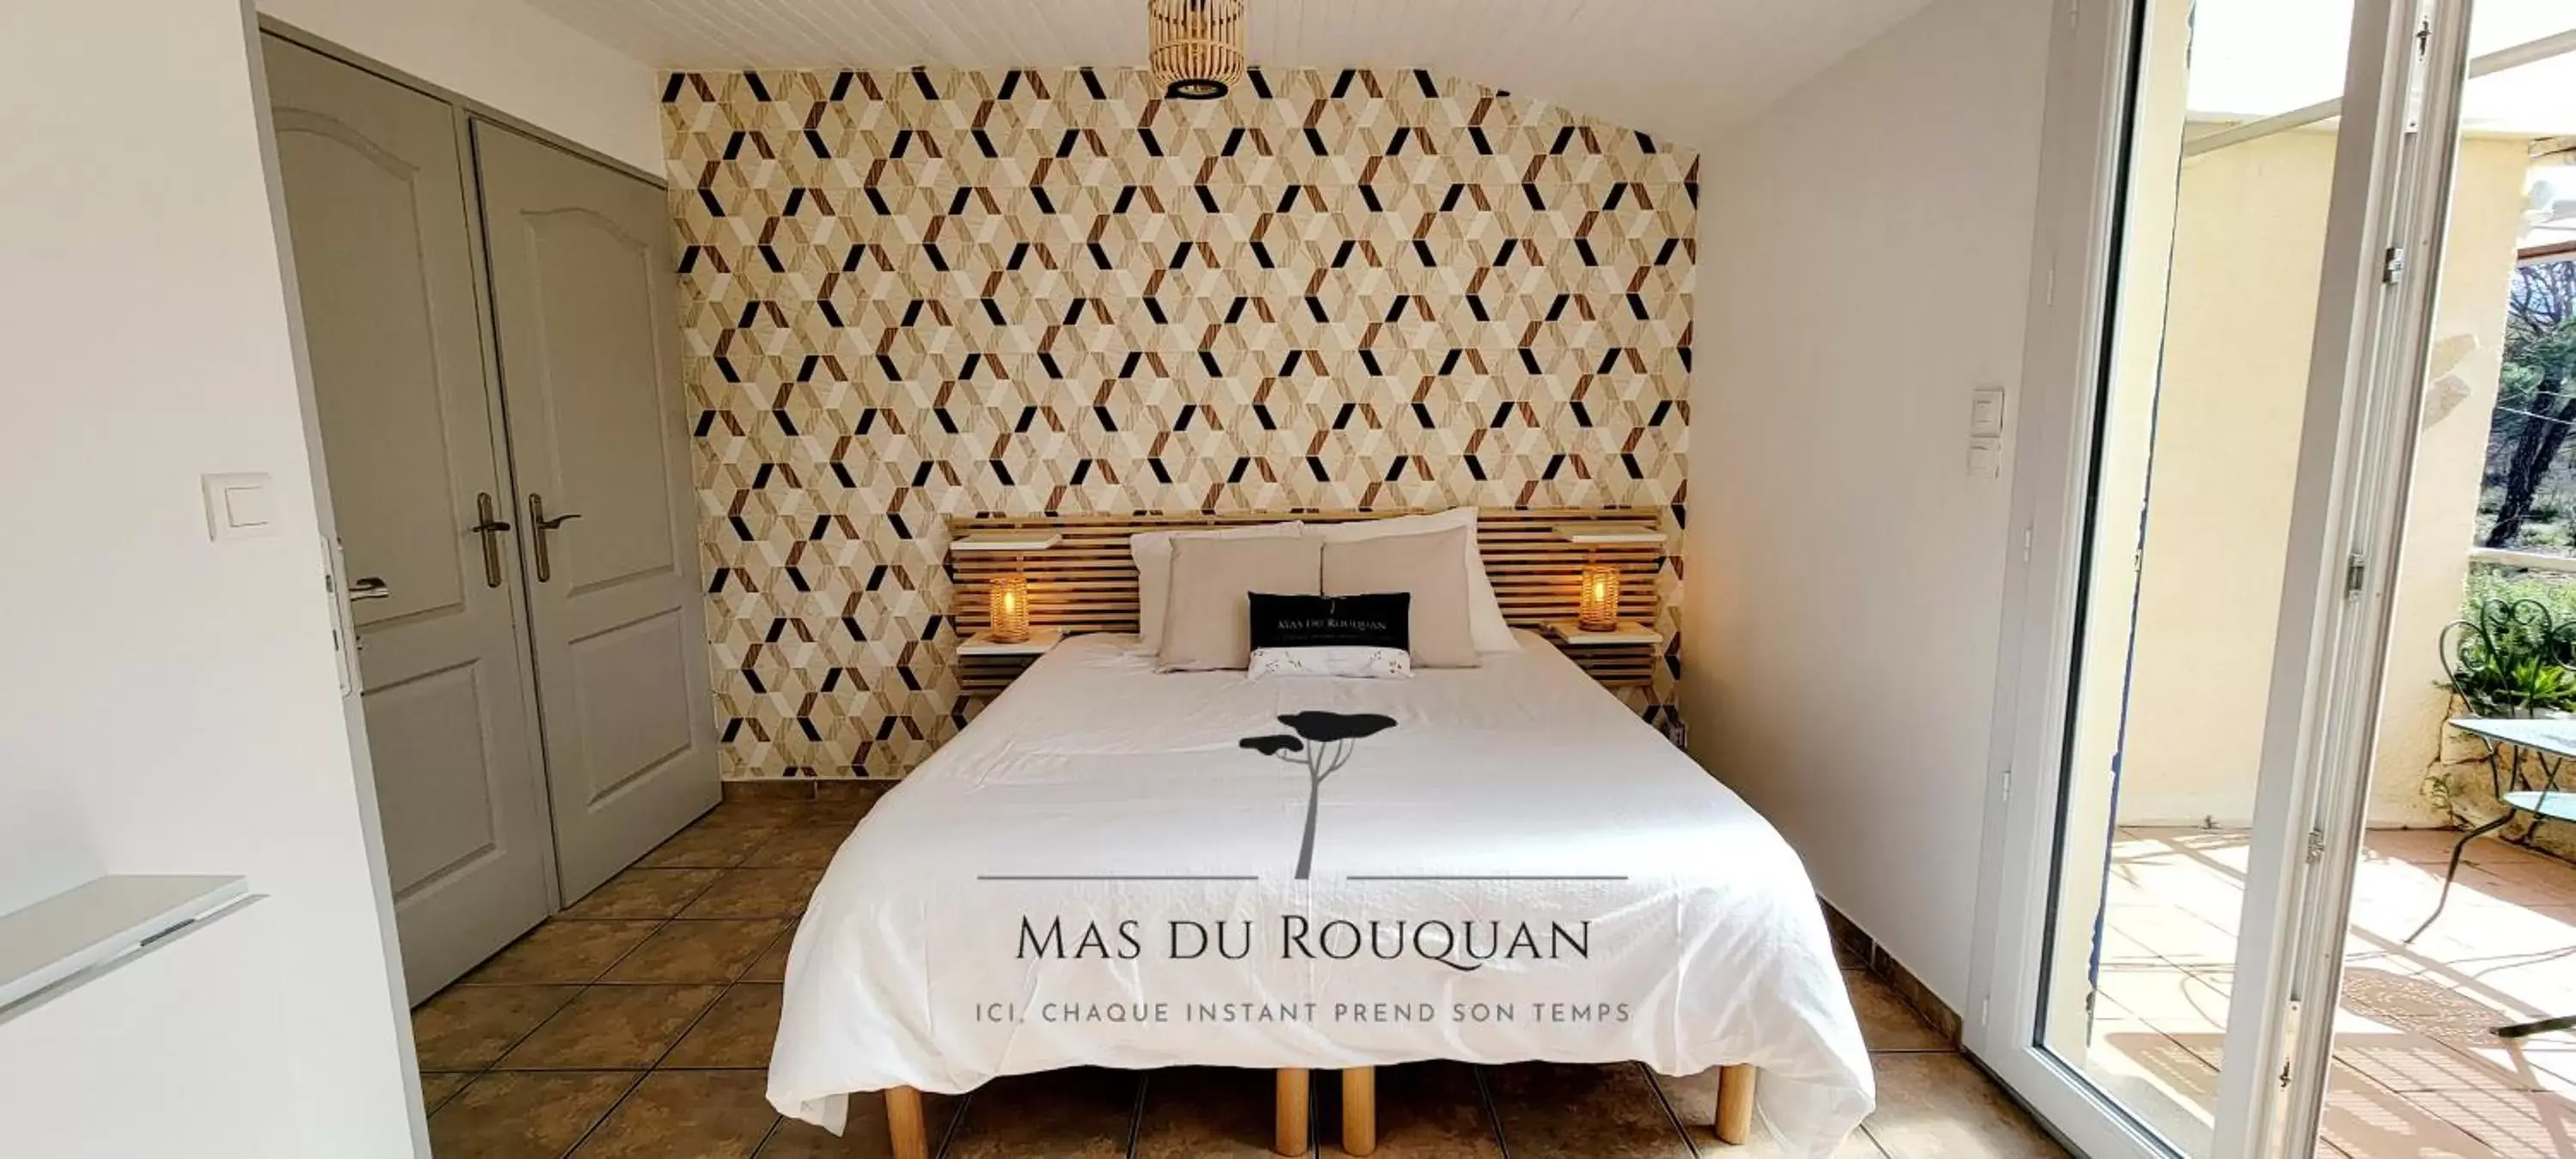 Bedroom in Le Mas du Rouquan